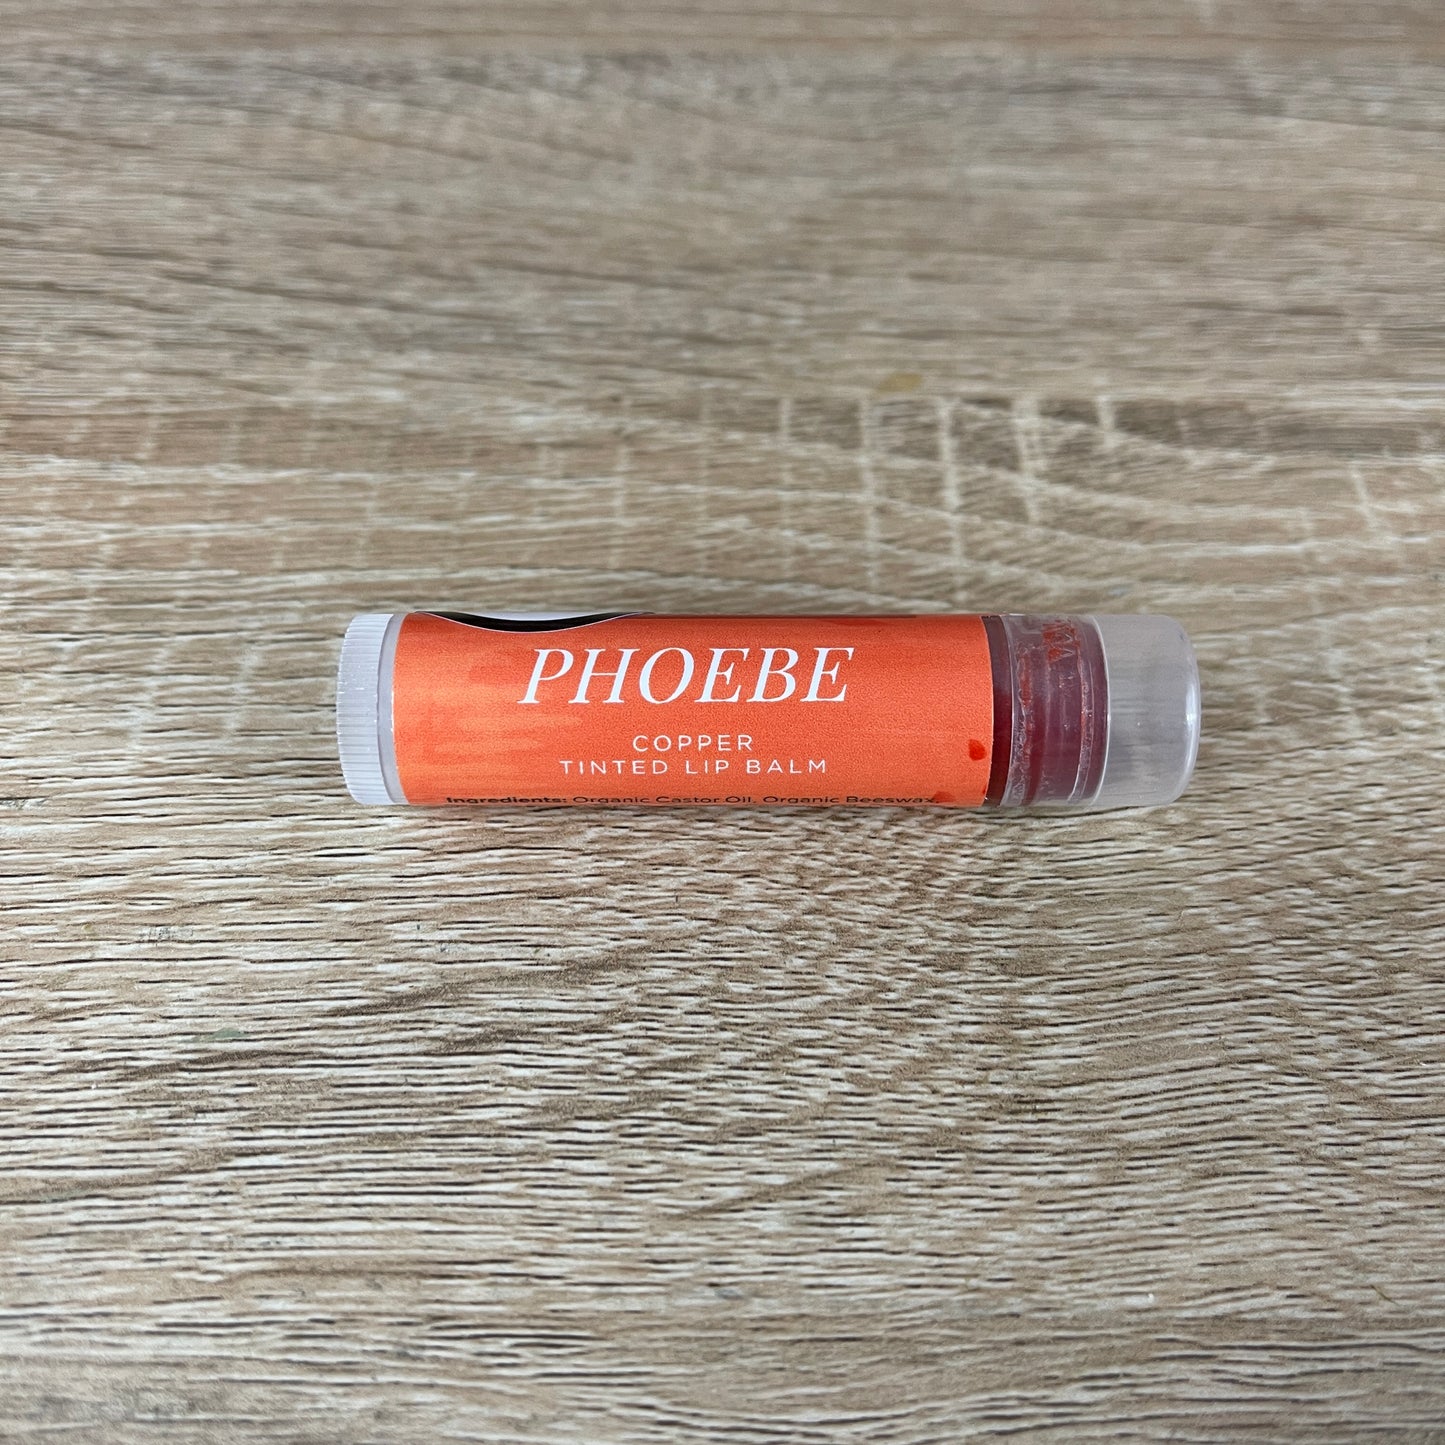 Tinted Lip Balm - Phoebe (Copper)